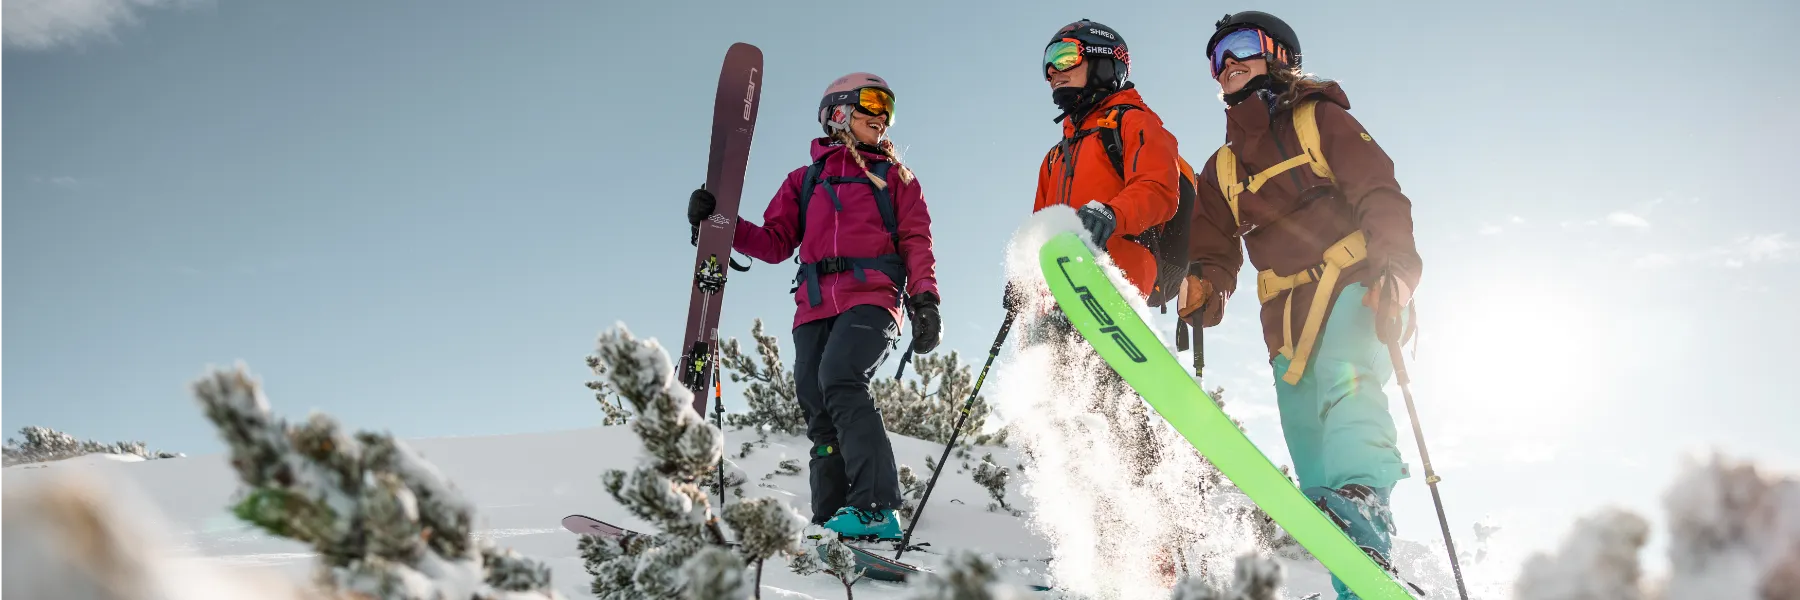 Ski Gear, Apparel, Accessories and Snowboard Shops